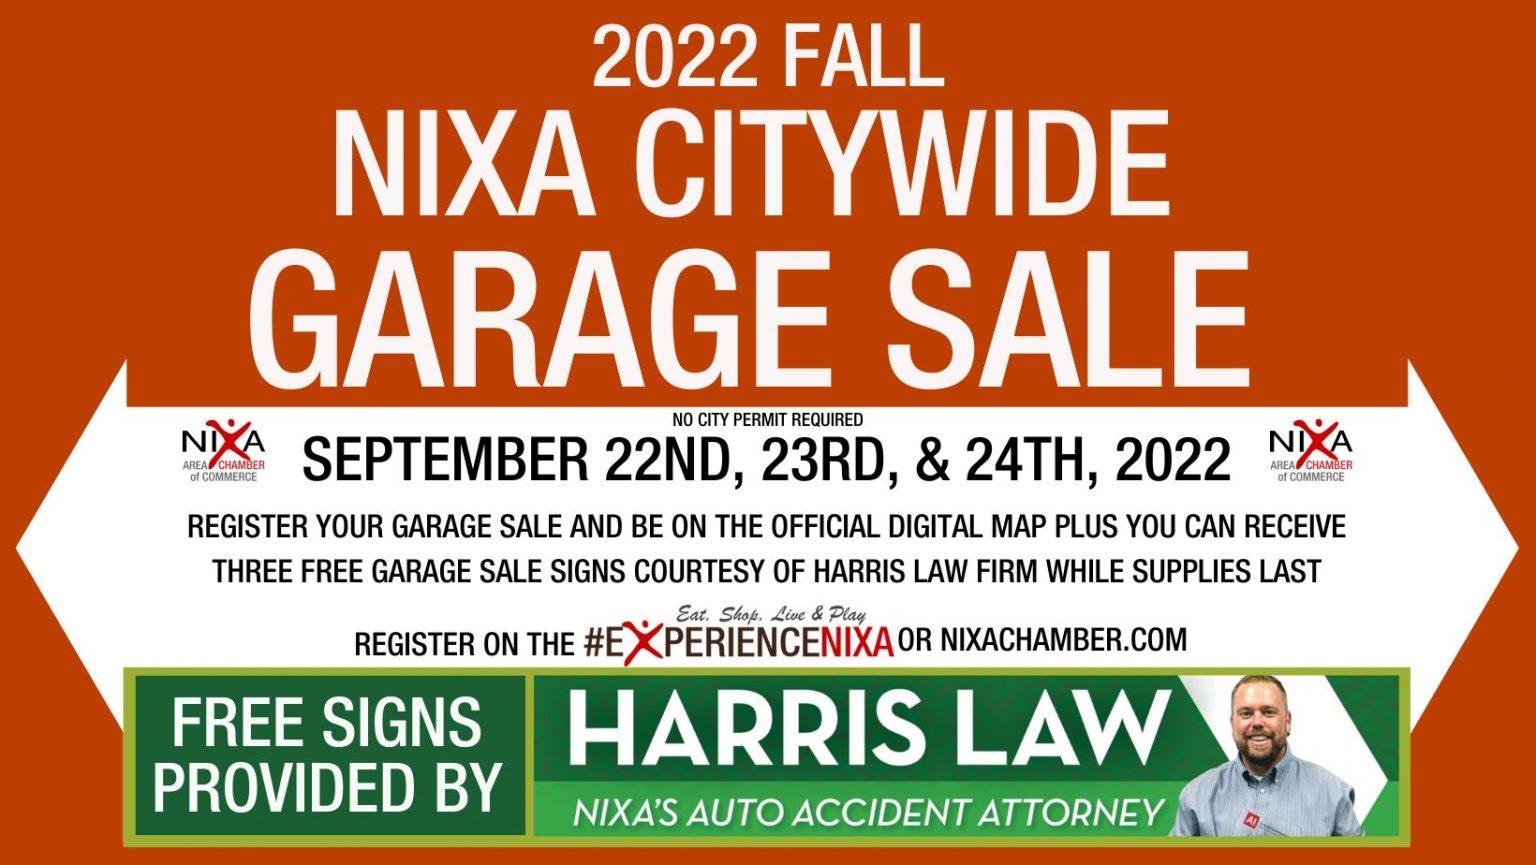 Nixa Citywide Garage Sale 104.1 KSGF